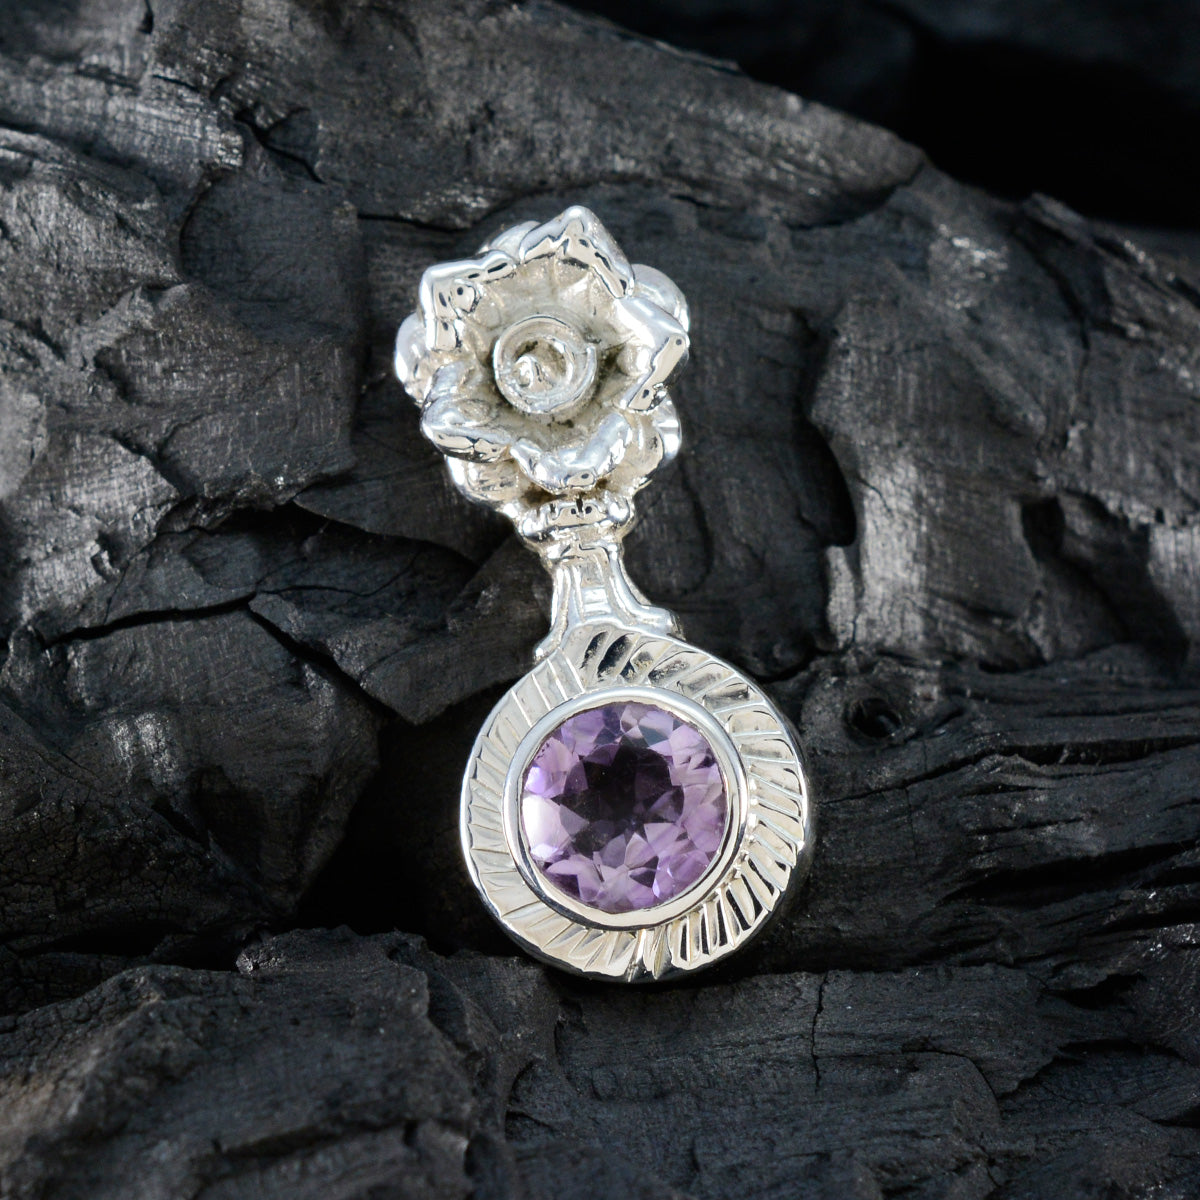 Riyo encantadora piedra preciosa redonda facetada amatista púrpura colgante de plata de ley regalo para hecho a mano